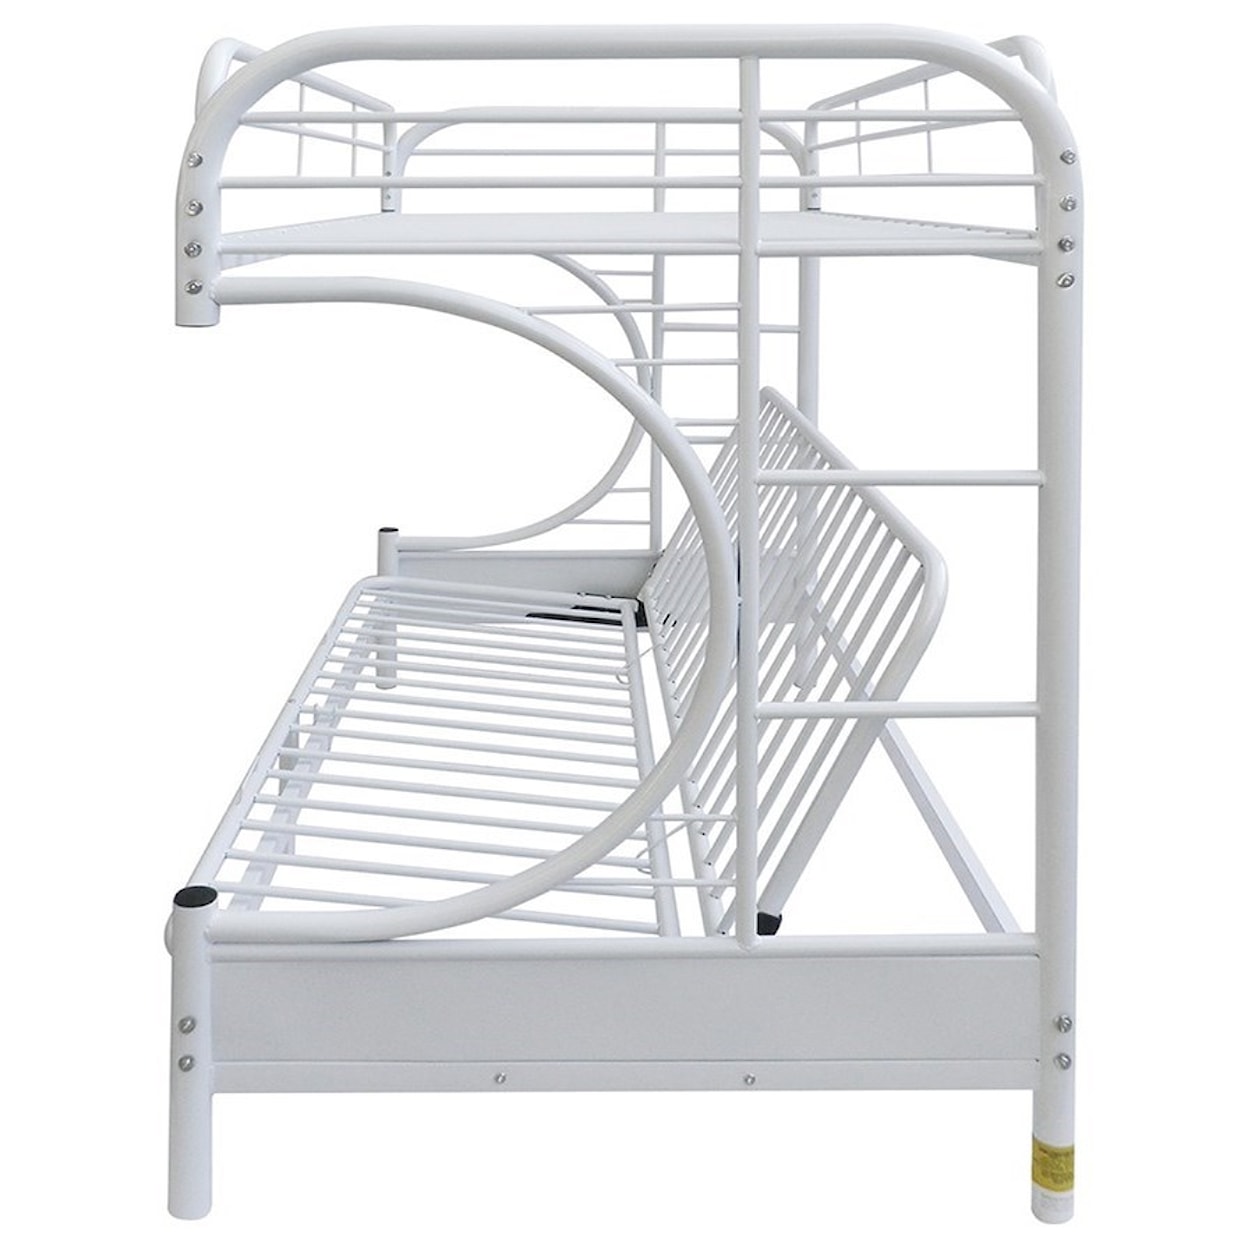 Acme Furniture Bunk Bed WHITE TWIN FUTON BUNK BED |